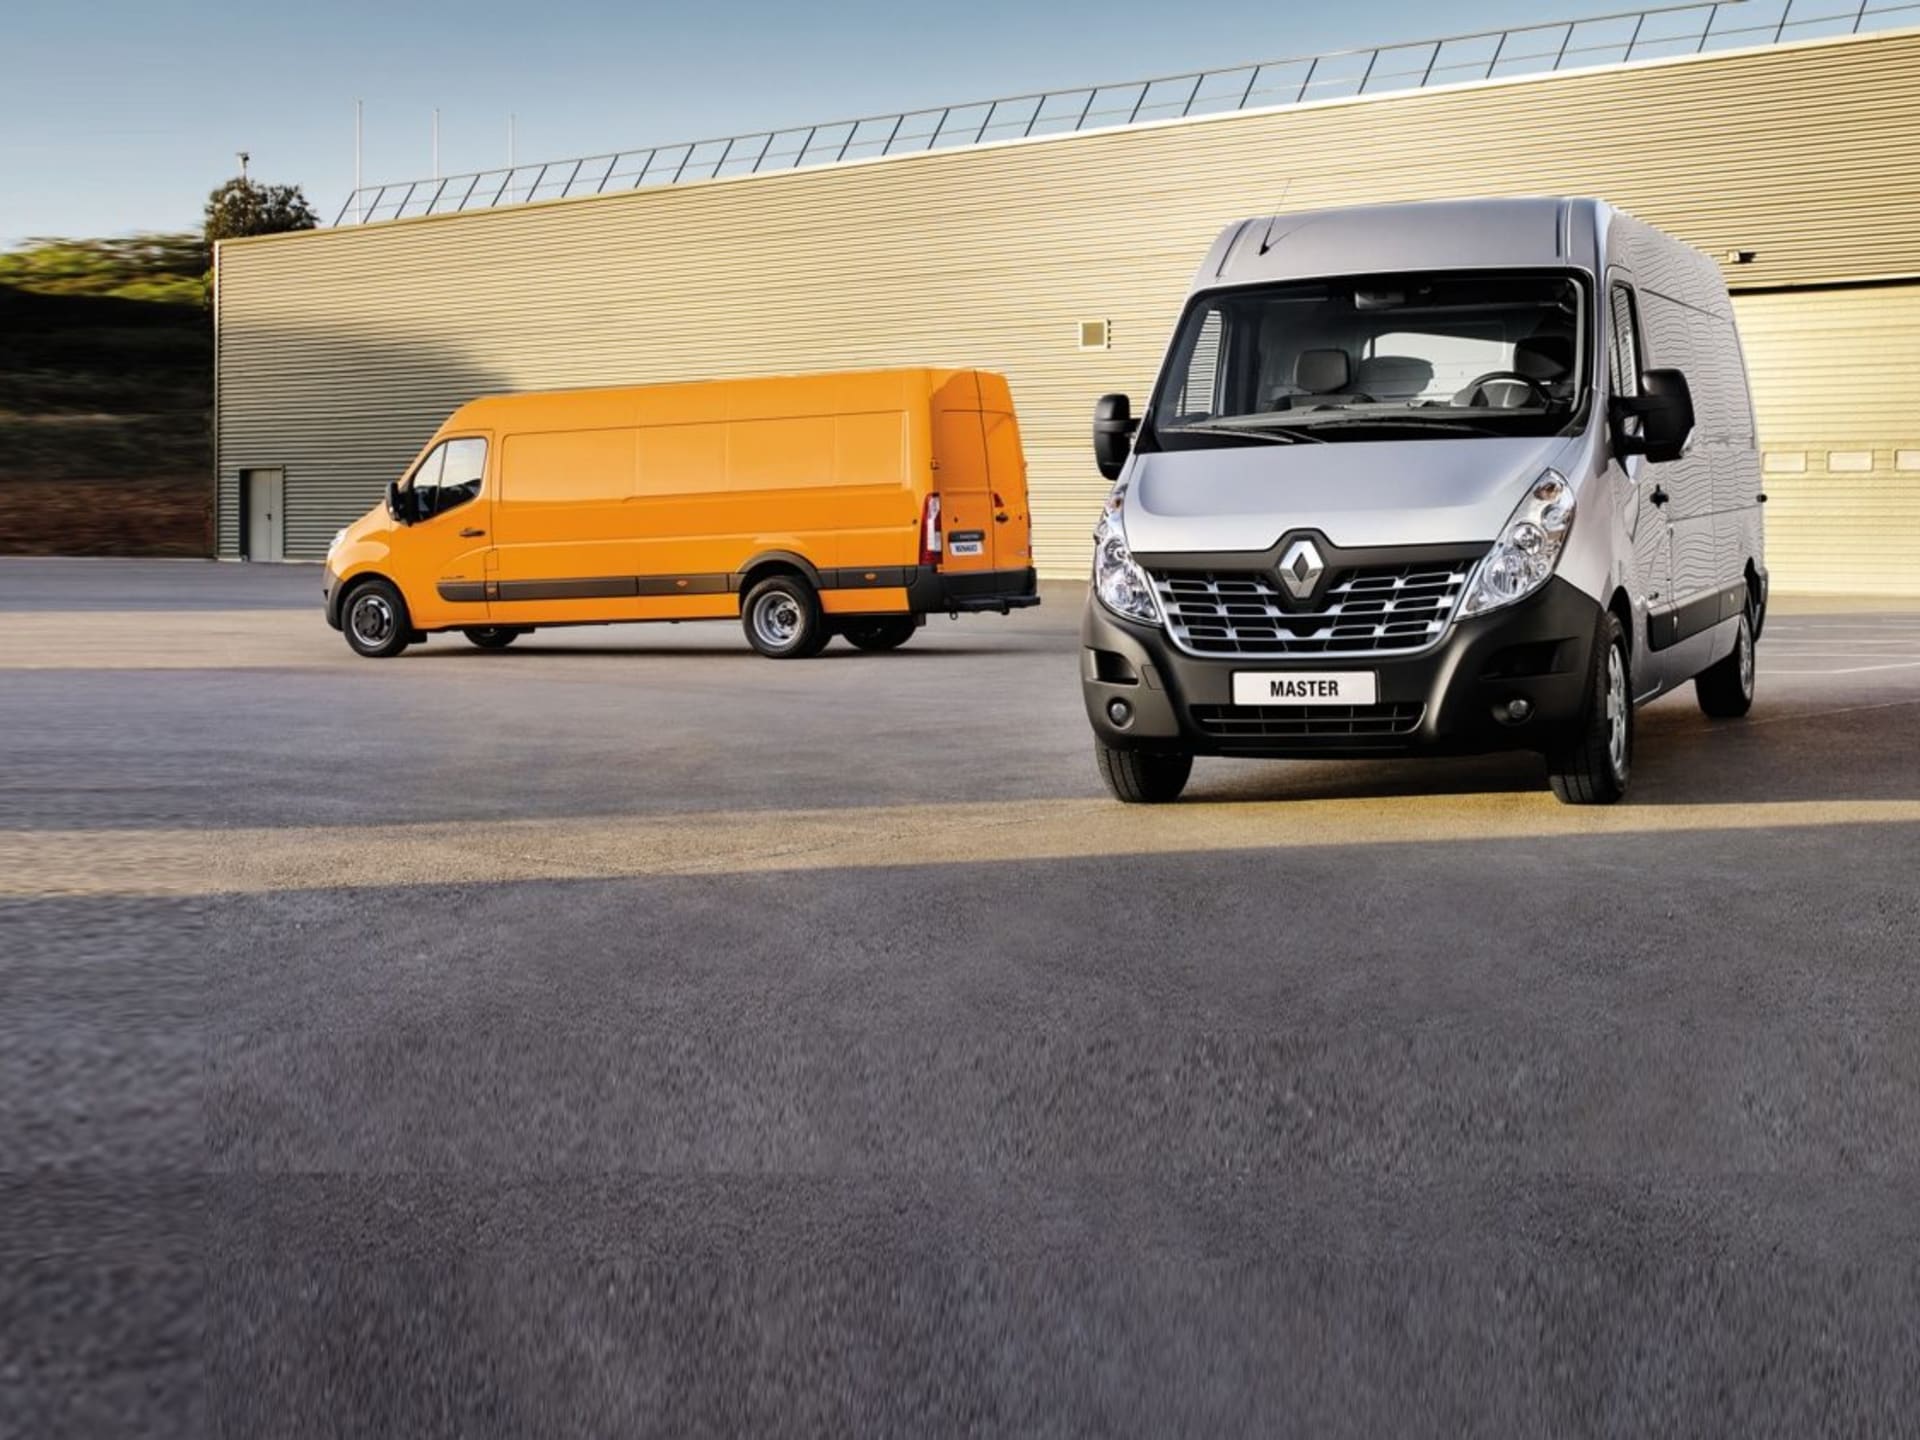 New Renault Vans | Llandudno, Conwy | W R Davies Renault